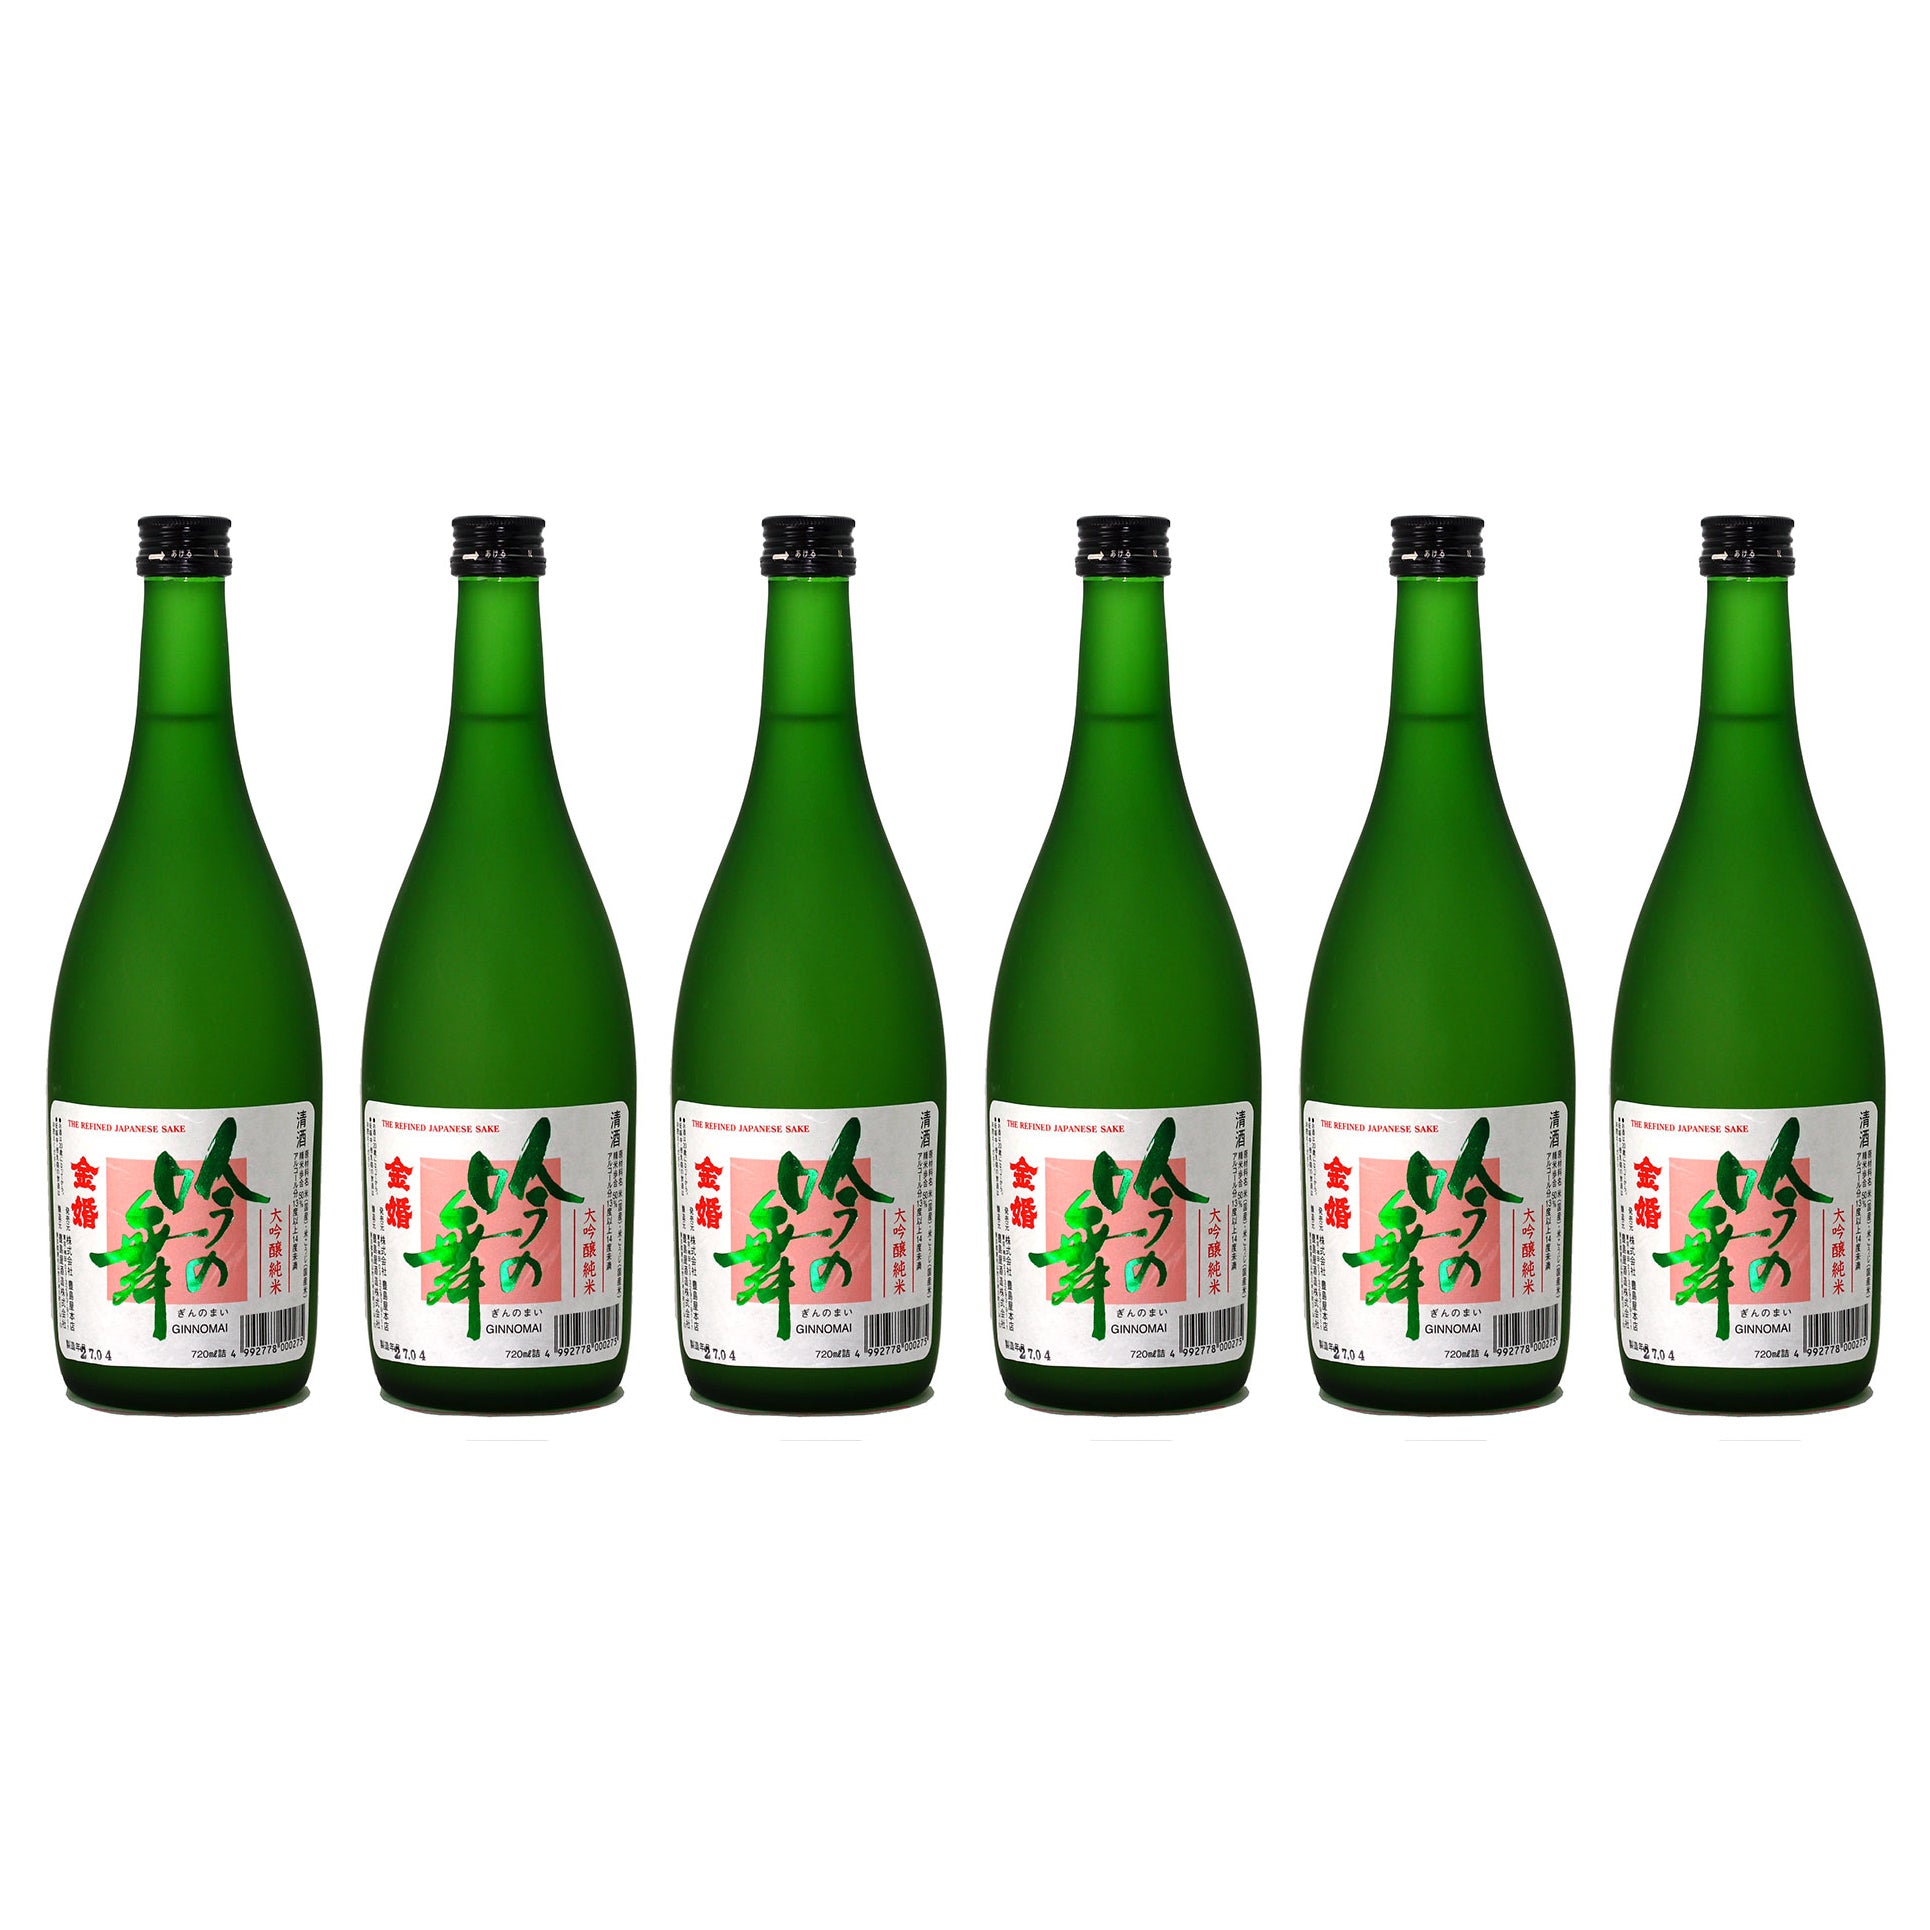 "Gin no Mai" (720ml) x 6 Bottle Pack